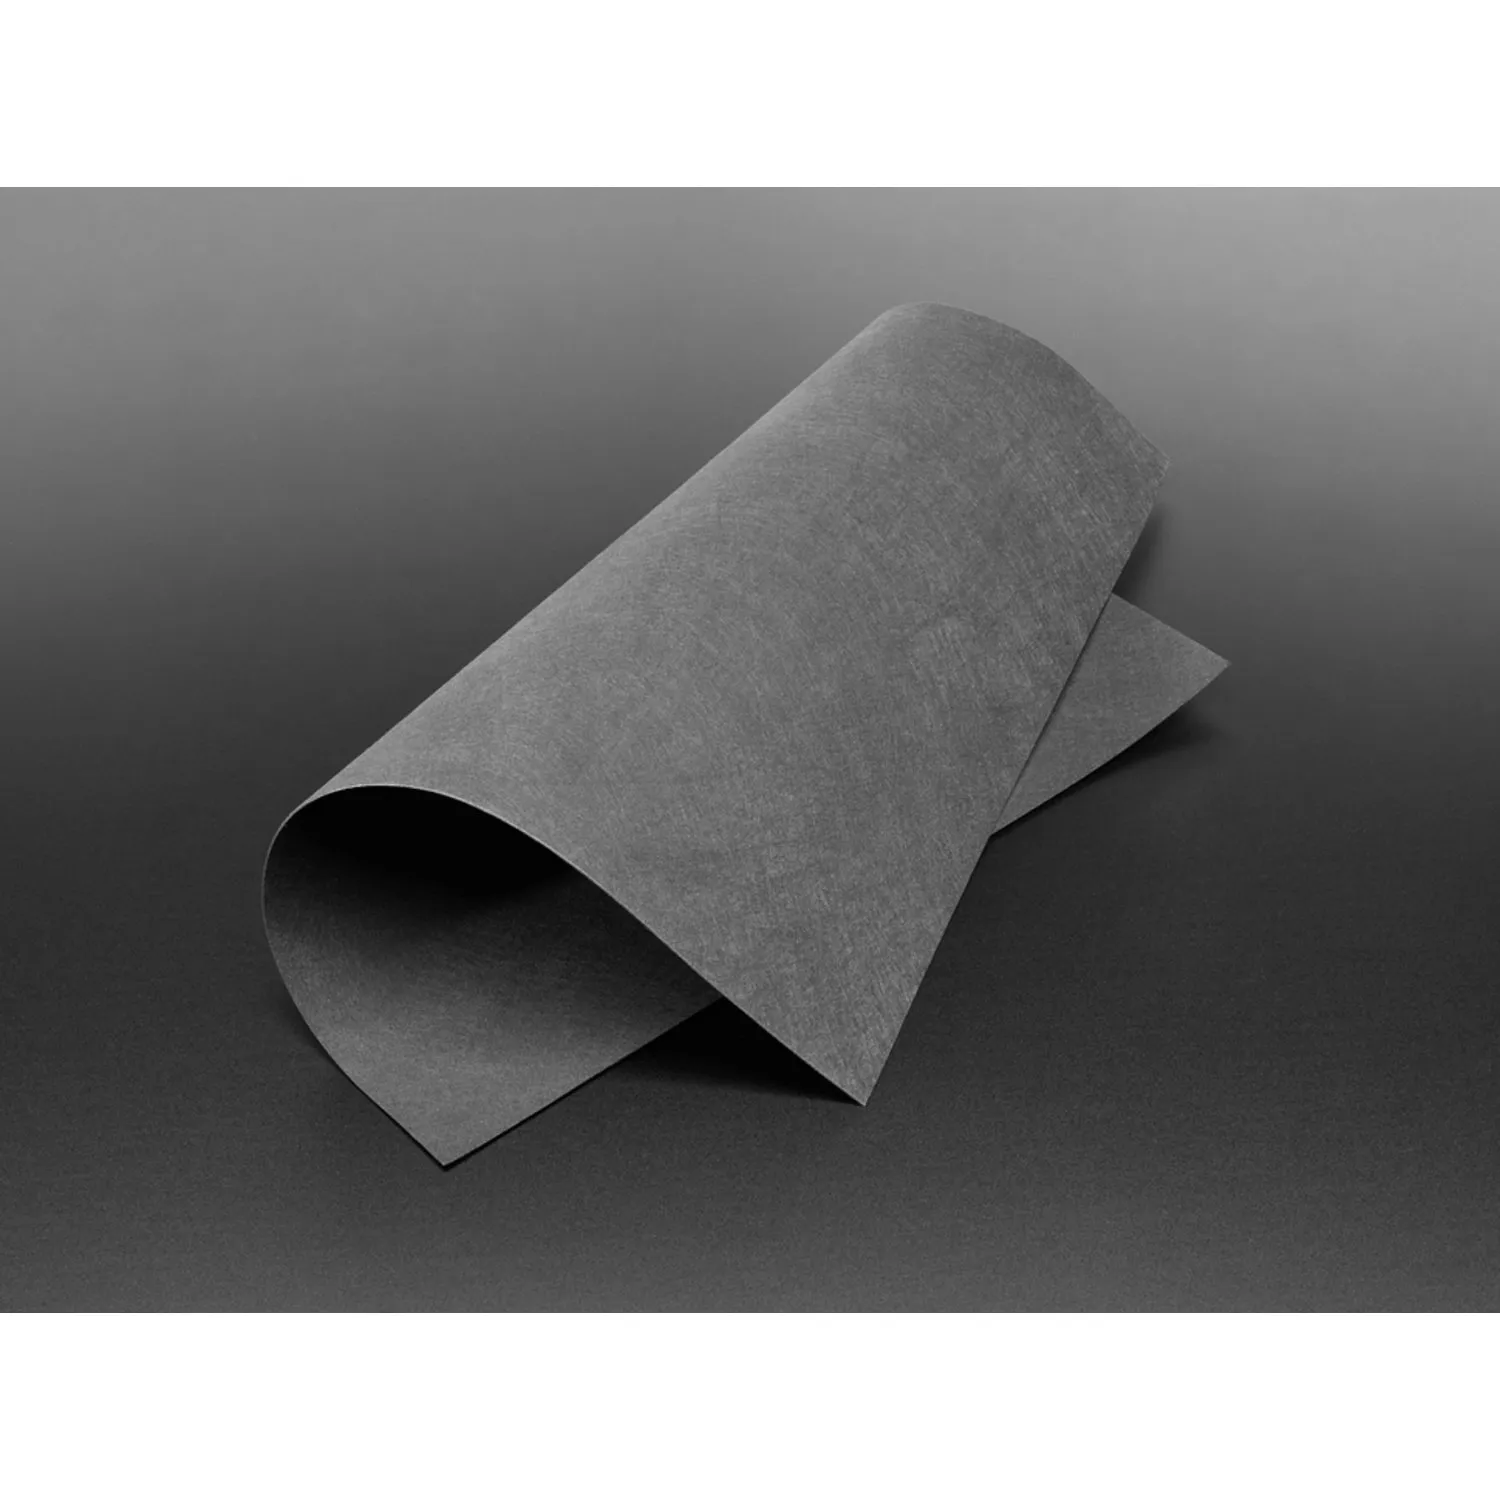 Photo of Eeontex High-Conductivity Heater Fabric - NW170-PI-20